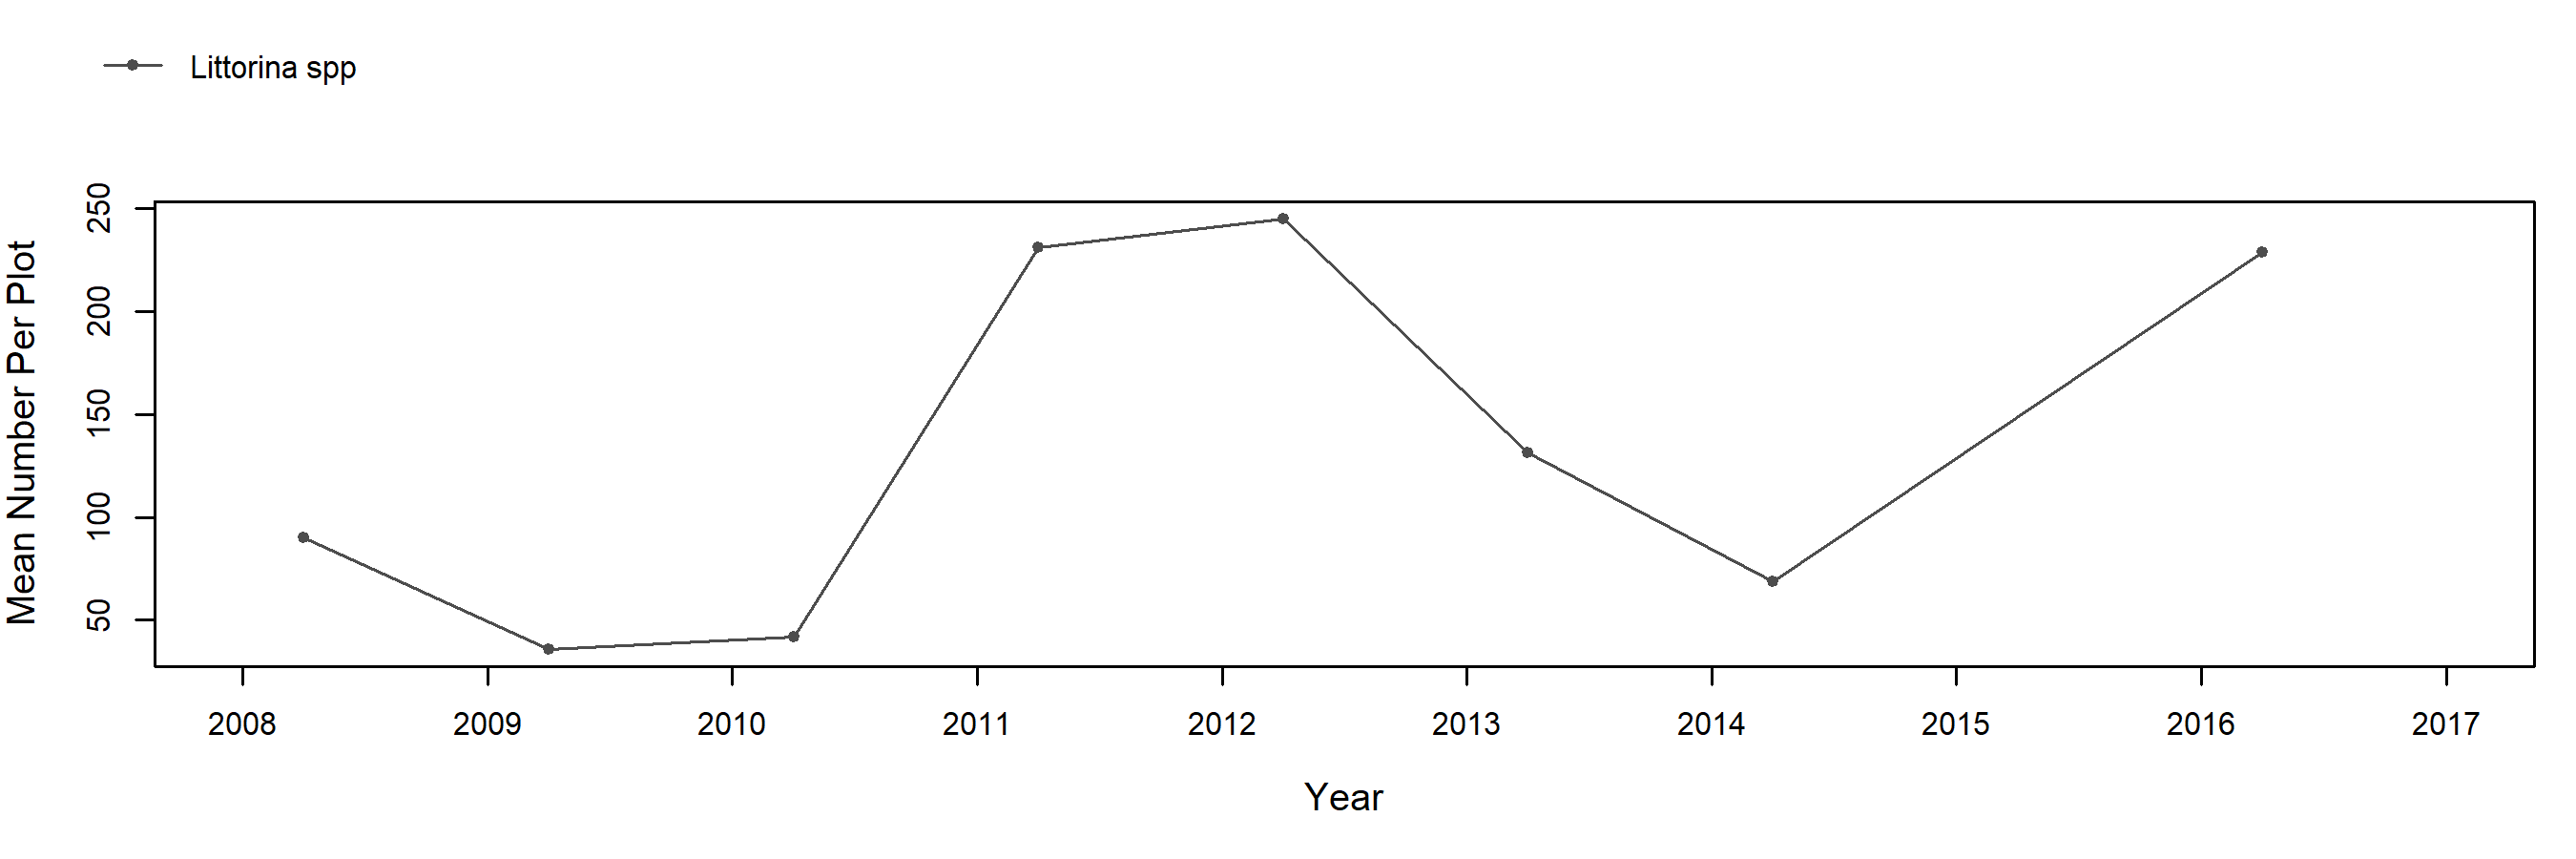 Kydikabbit Point barnacle trend plot